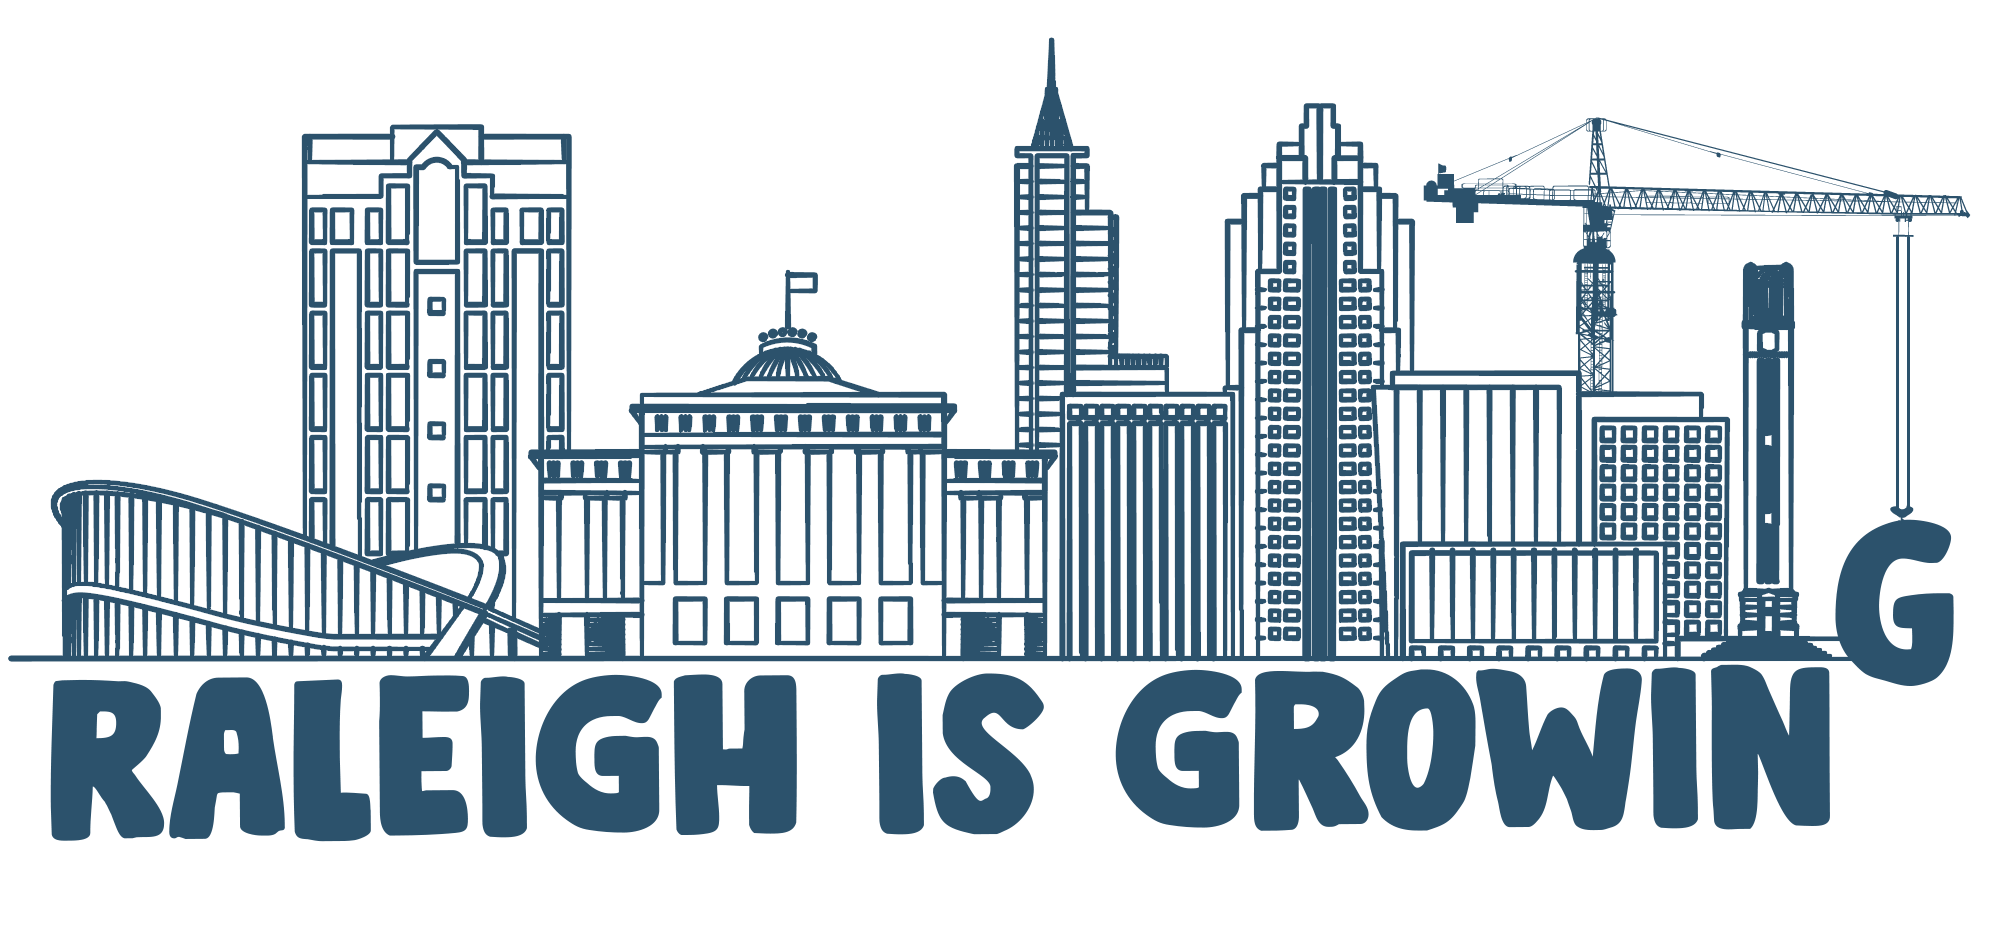 Raleigh is Growing logo